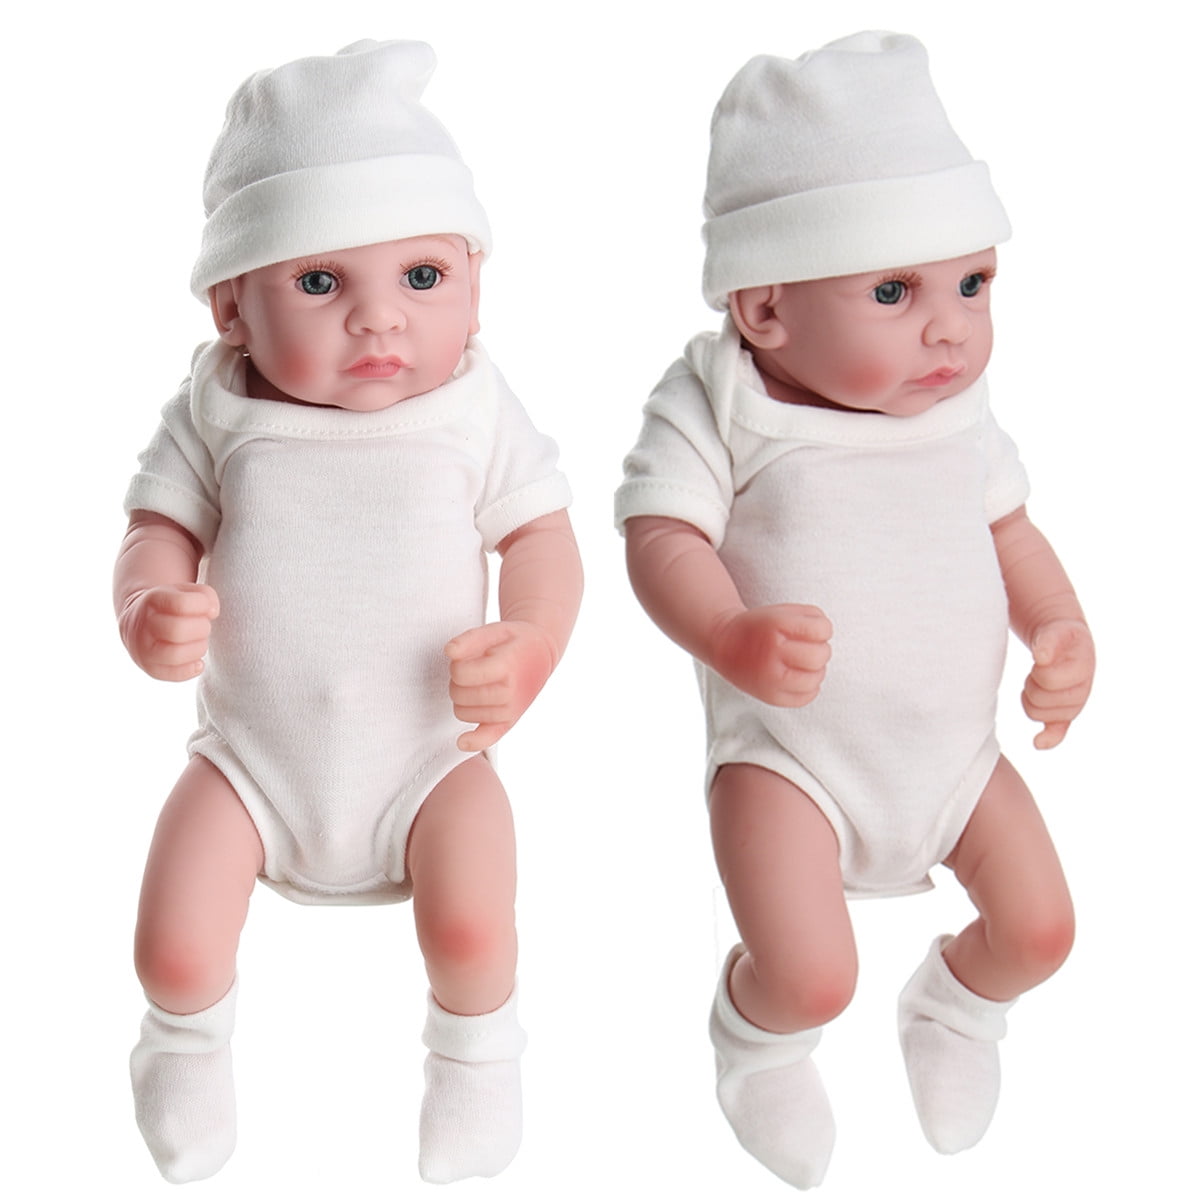 Reborn Dolls Boys Newborn Baby Doll Vinyl Silicone Clothes 11" Lifelike Gift Toy 